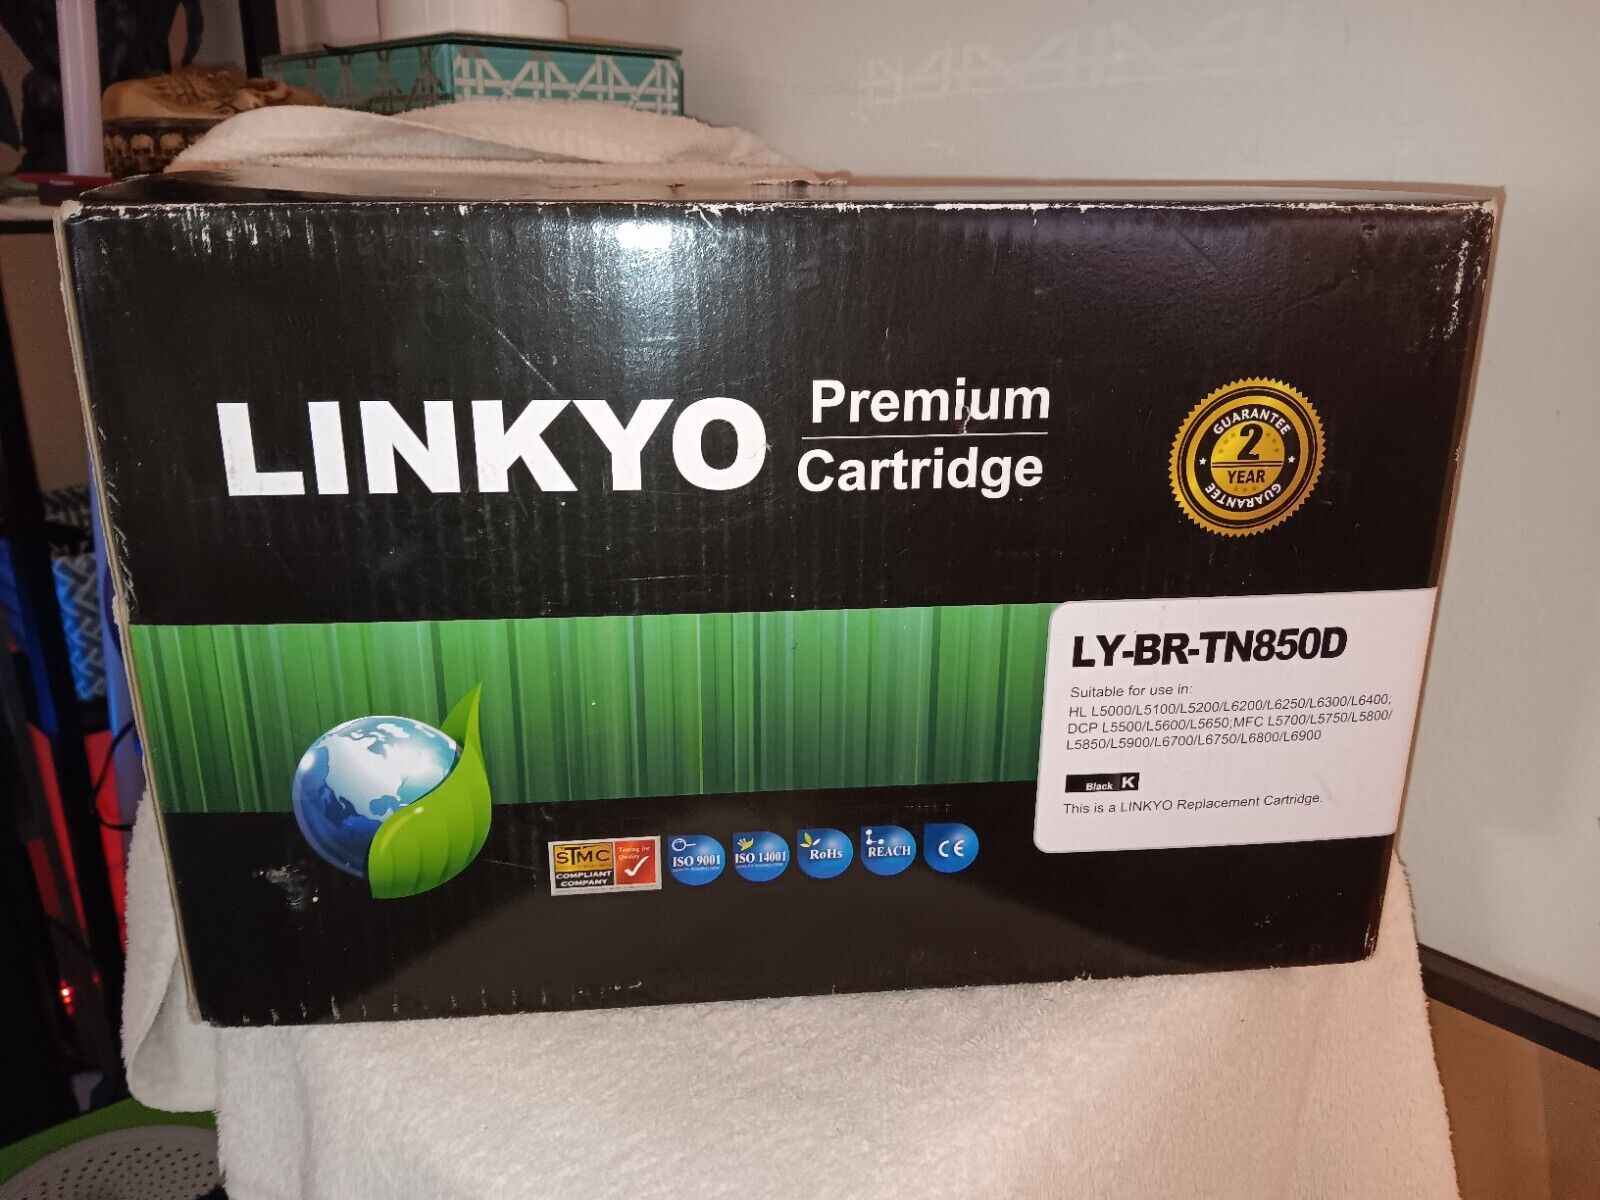 Linkyo Black Toner Replacement Cartridges LY-BR-TN850D - 2 Pk. New